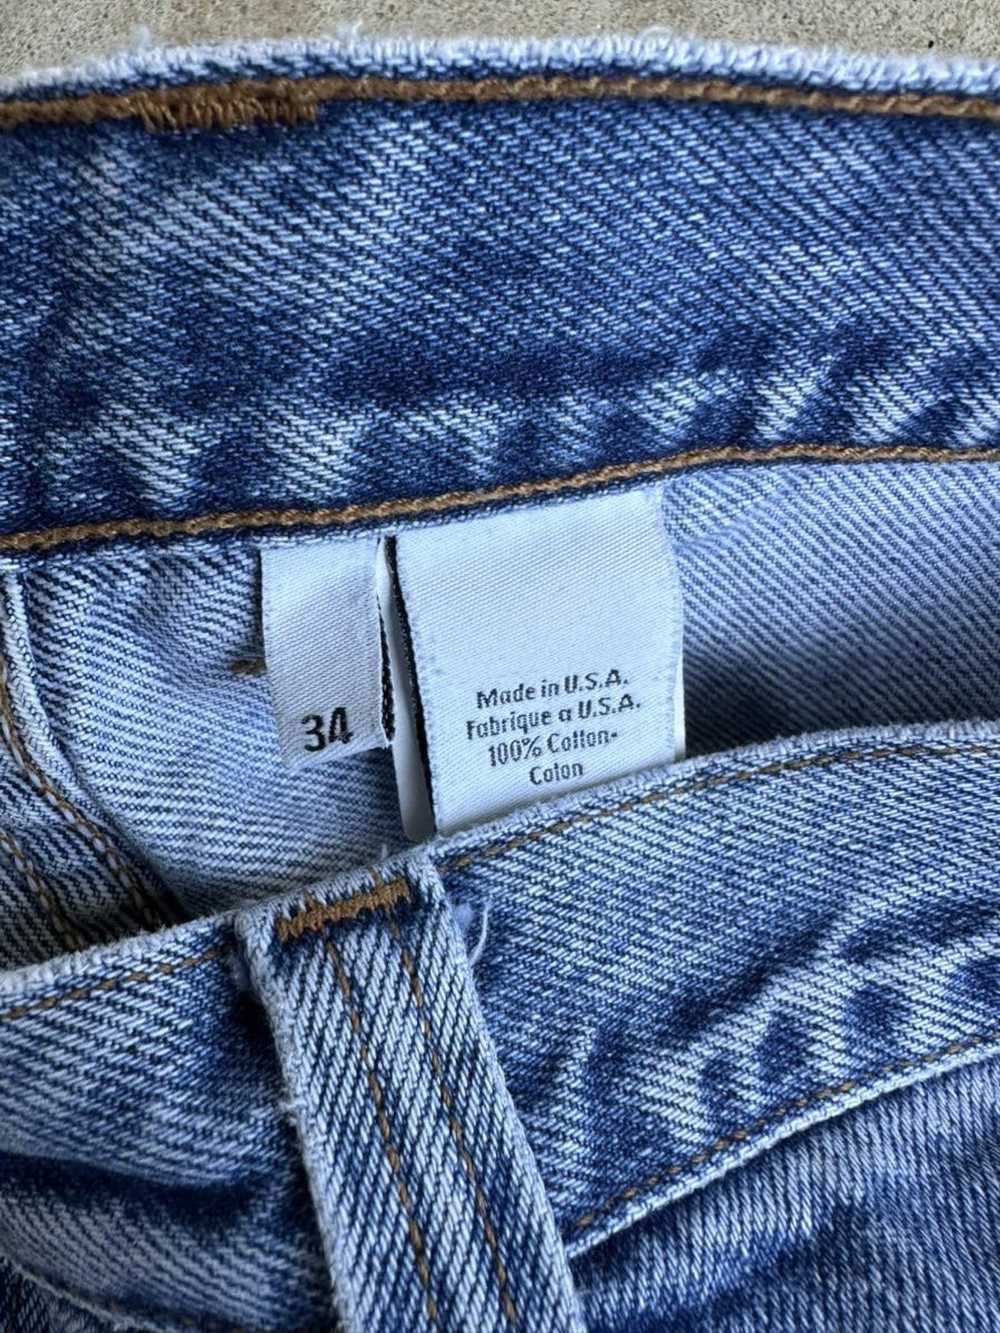 Calvin Klein Calvin Klein Jeans - Vintage - image 4